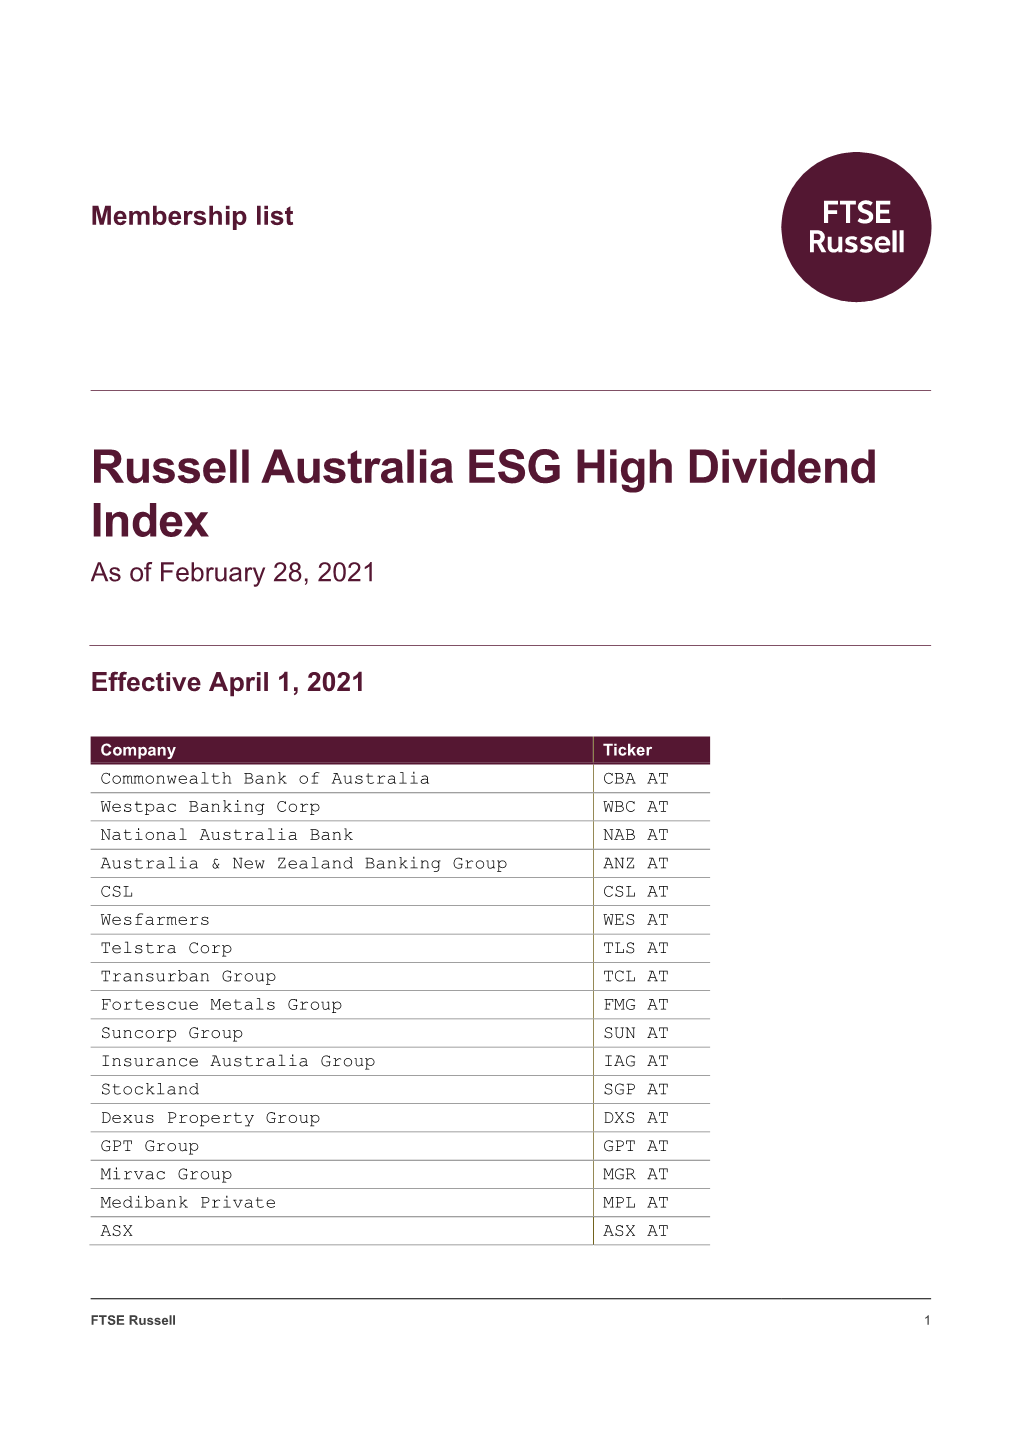 Australia ESG High Dividend Index Membership List (RARI)